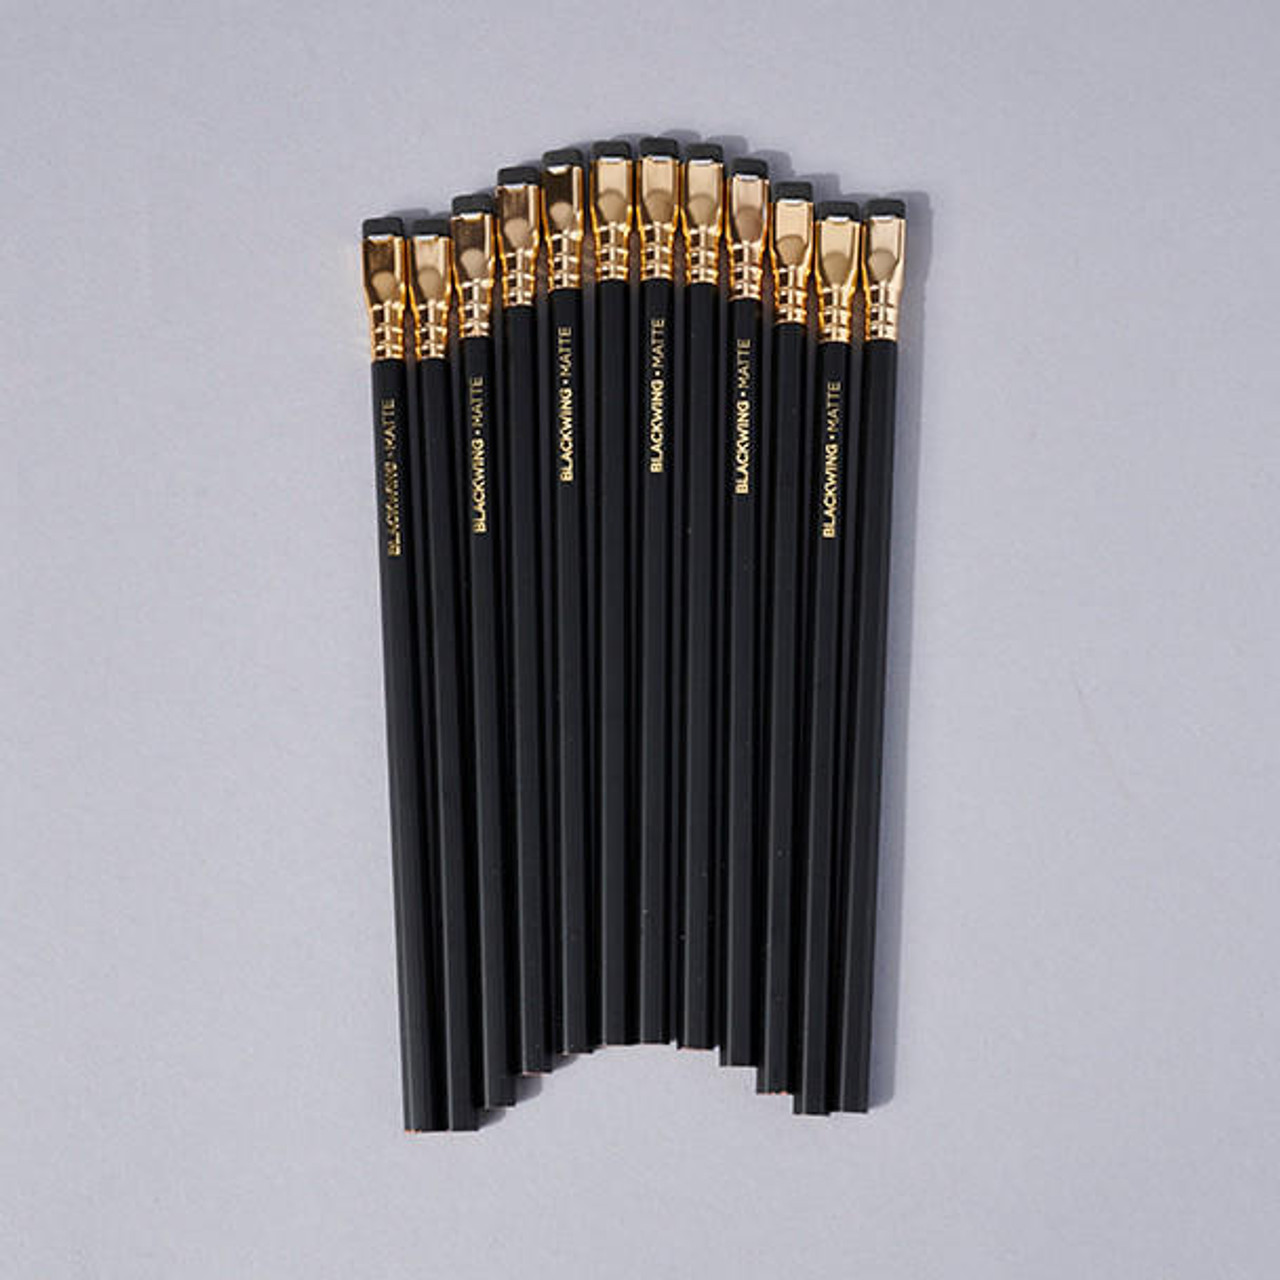 Blackwing Soft Graphite Pencils Matte Black